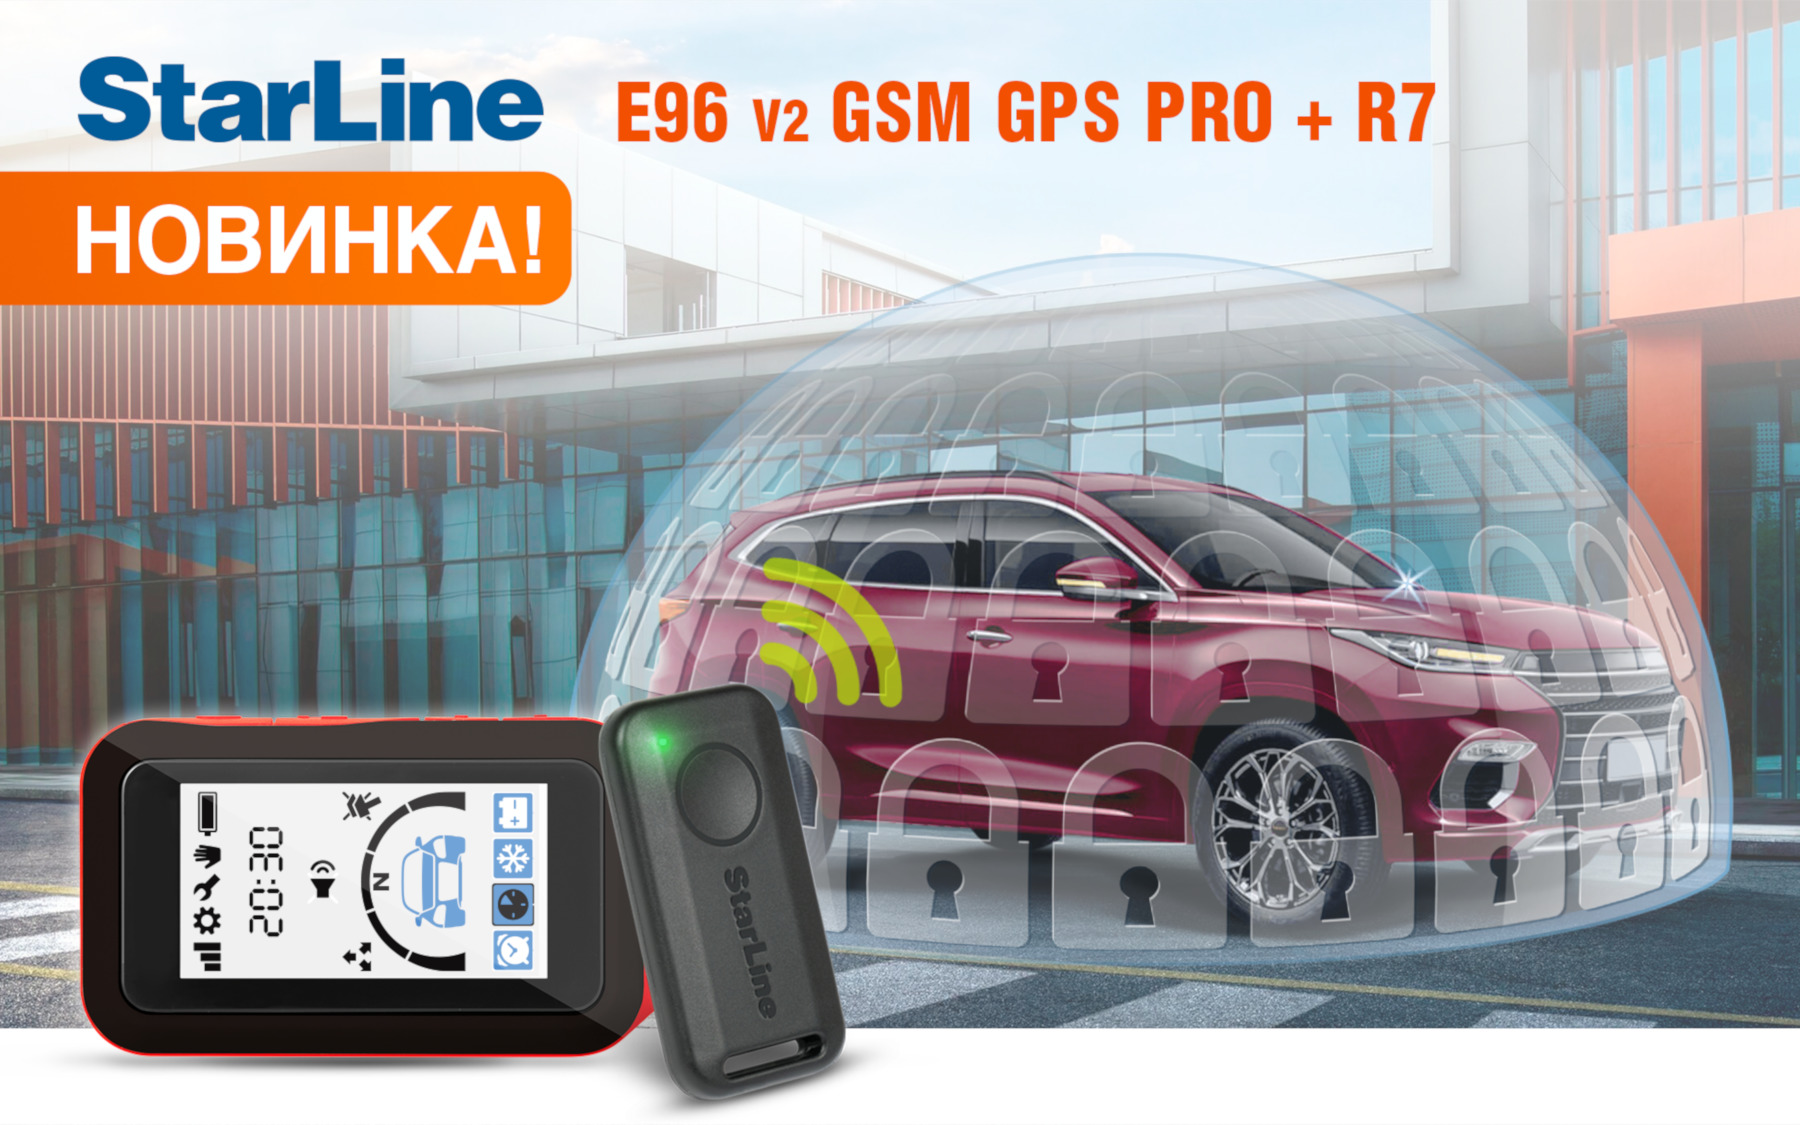 STARLINE E96 V2 GSM GPS PRO: УМНАЯ ЗАЩИТА И ПЕРСОНАЛЬНЫЙ КОМФОРТ